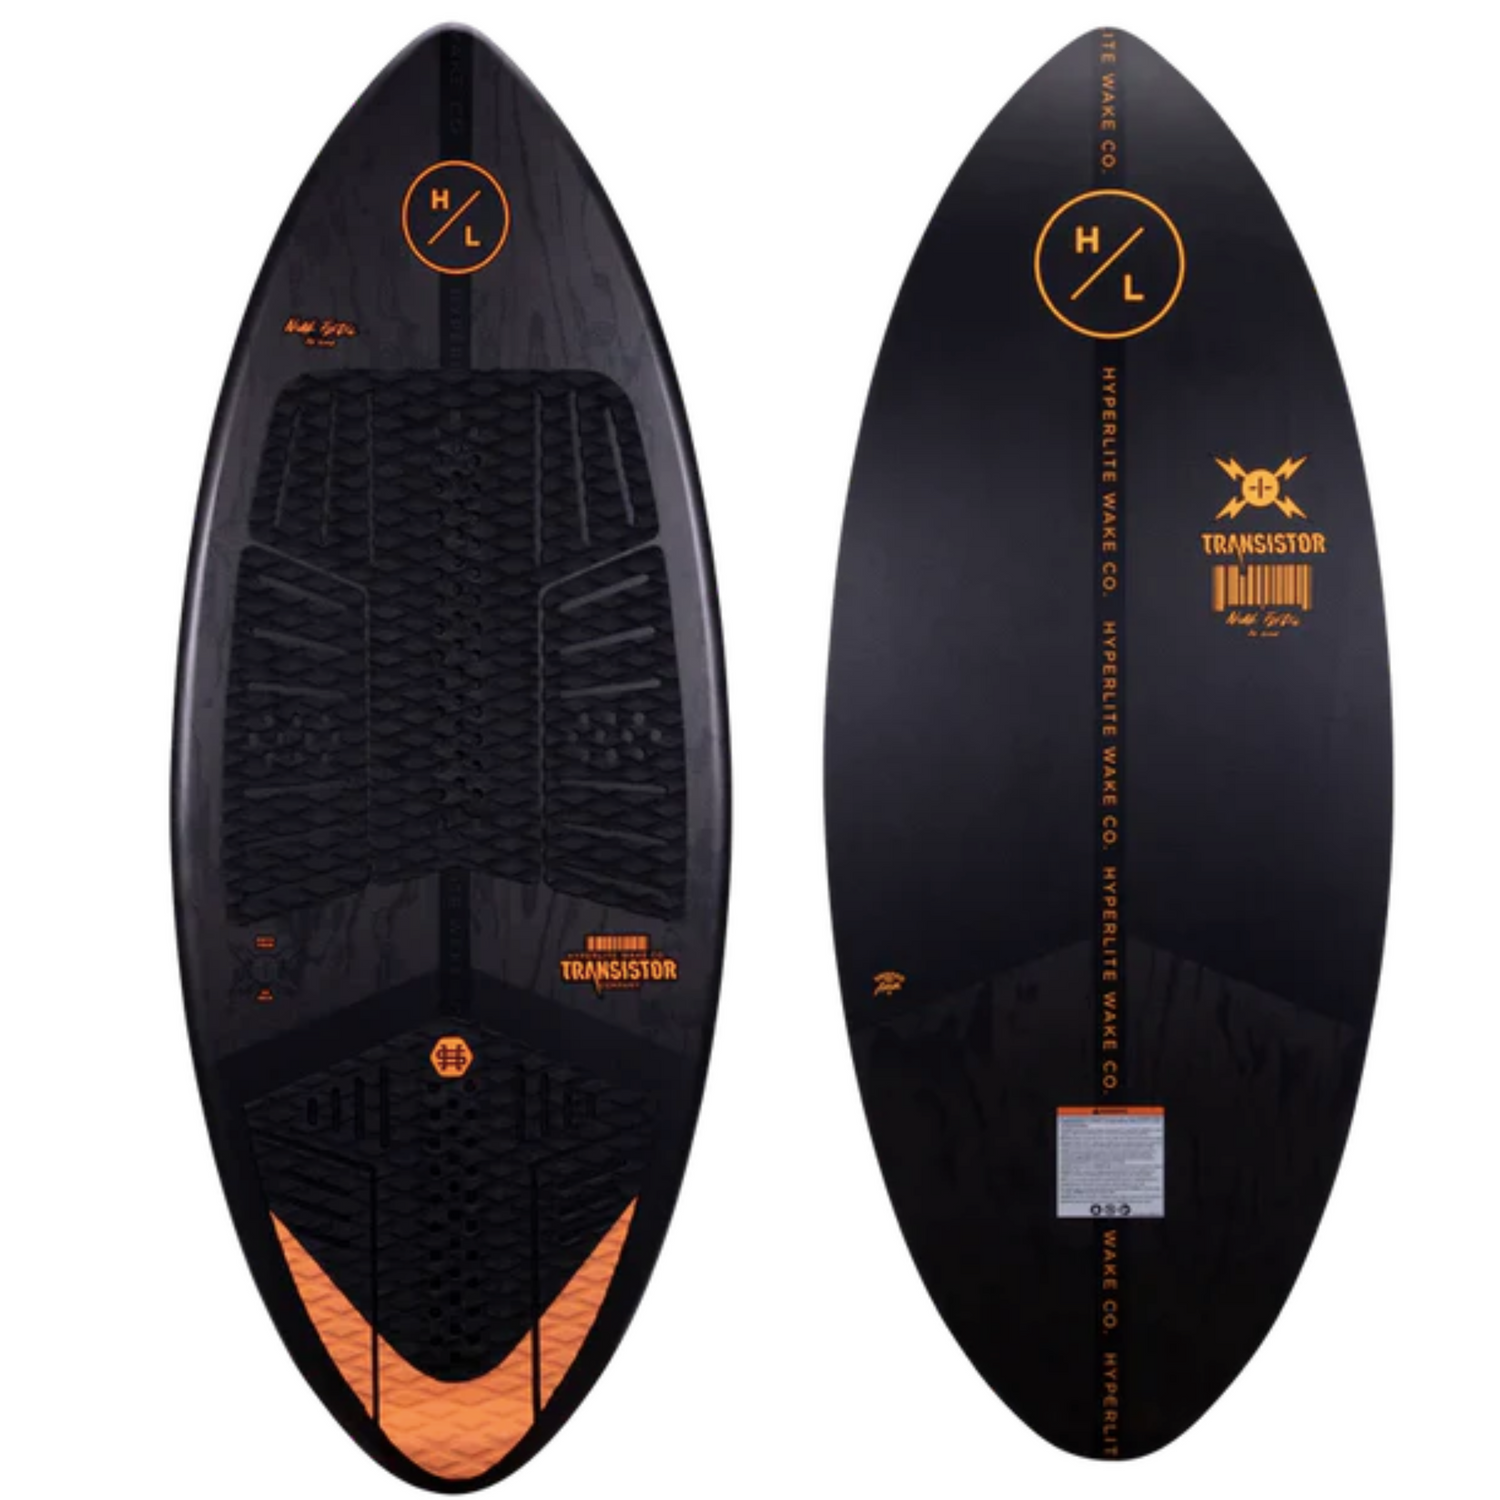 Hyperlite 54" Transistor wake surf board in orange and black 